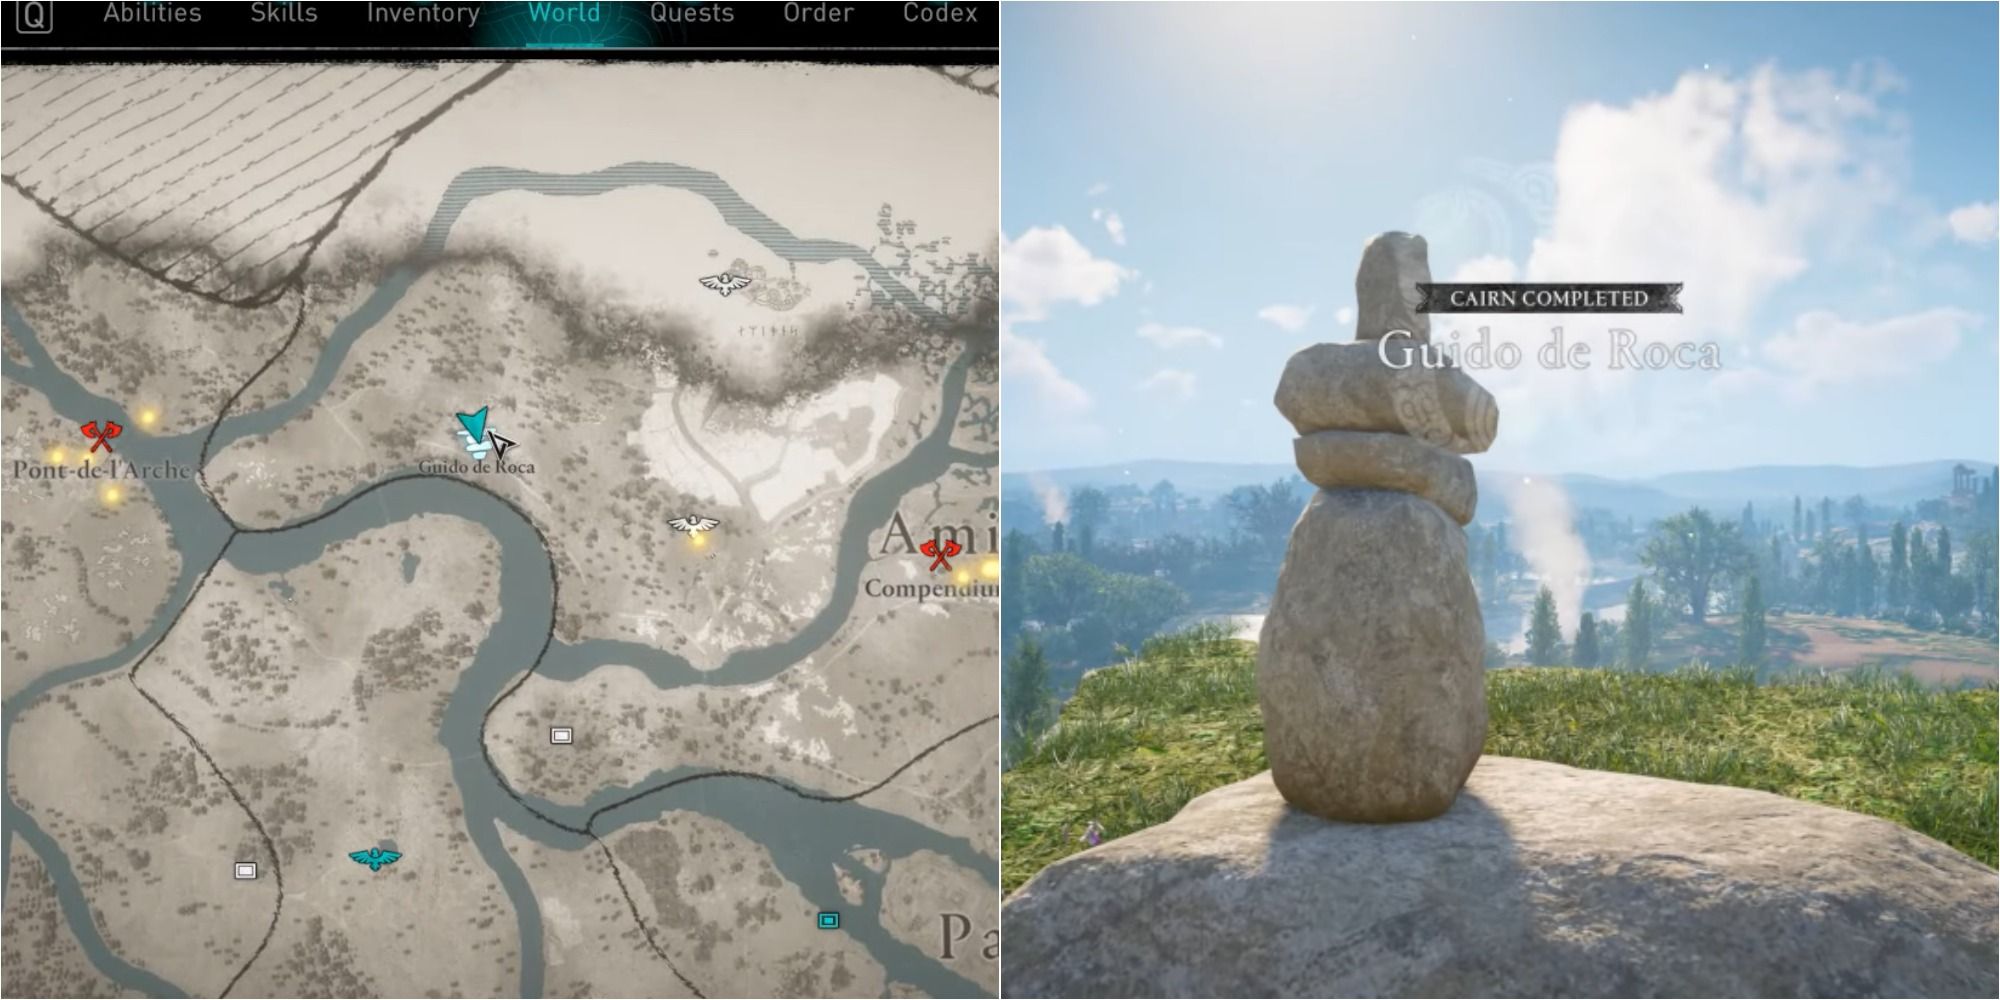 Assassin's Creed Valhalla Split Image Showing Guido De Roca Cairn Location